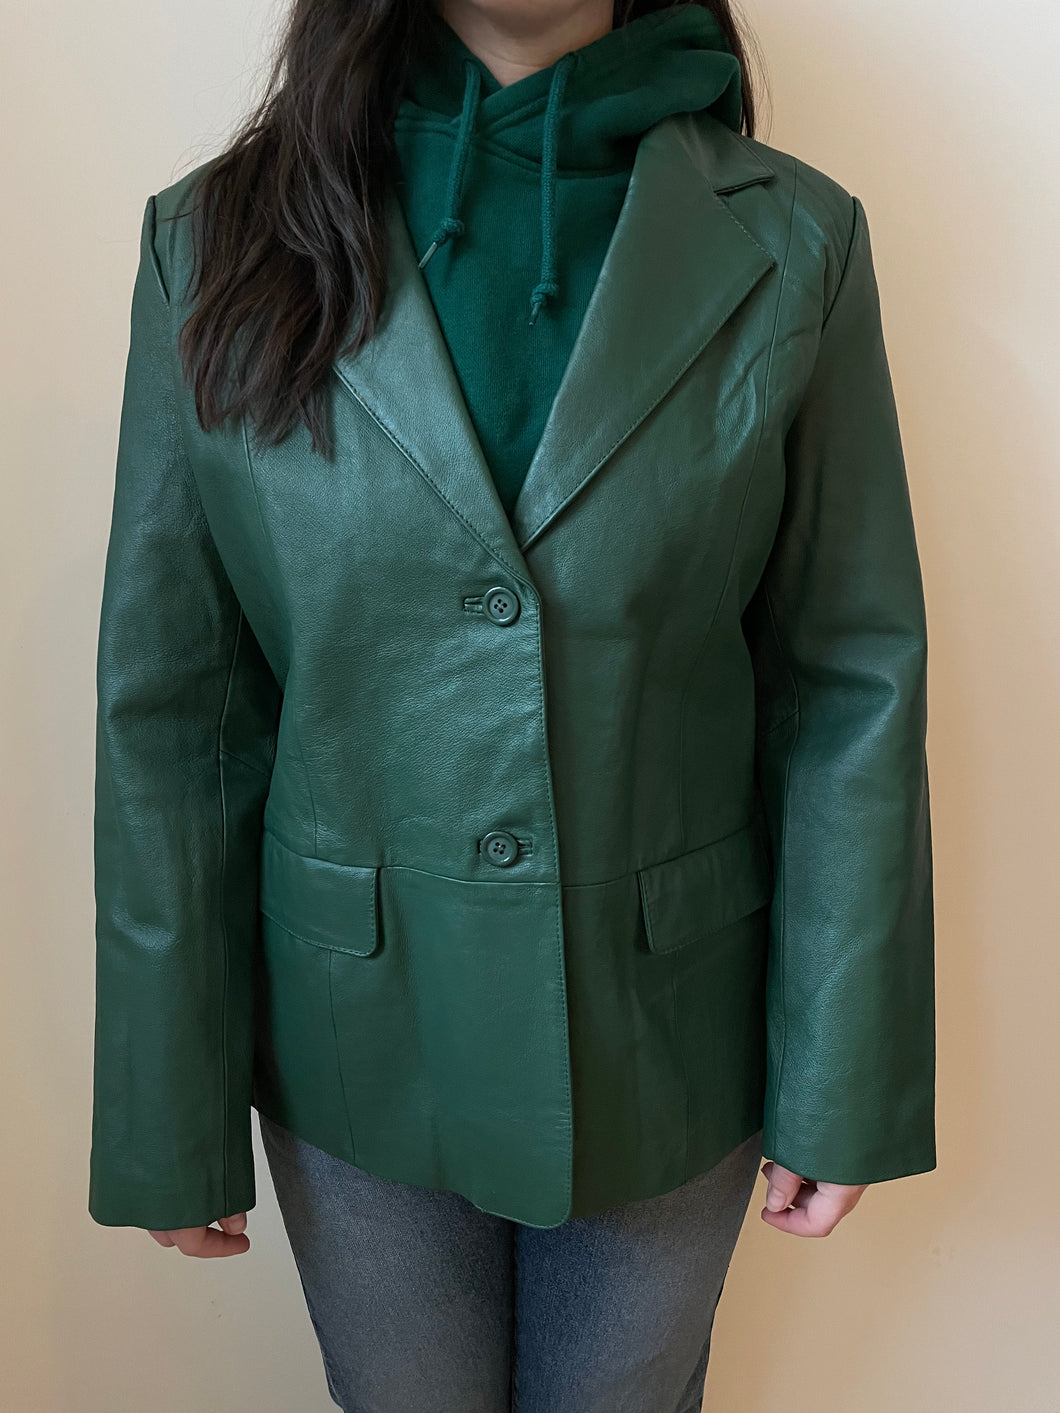 vintage green leather blazer